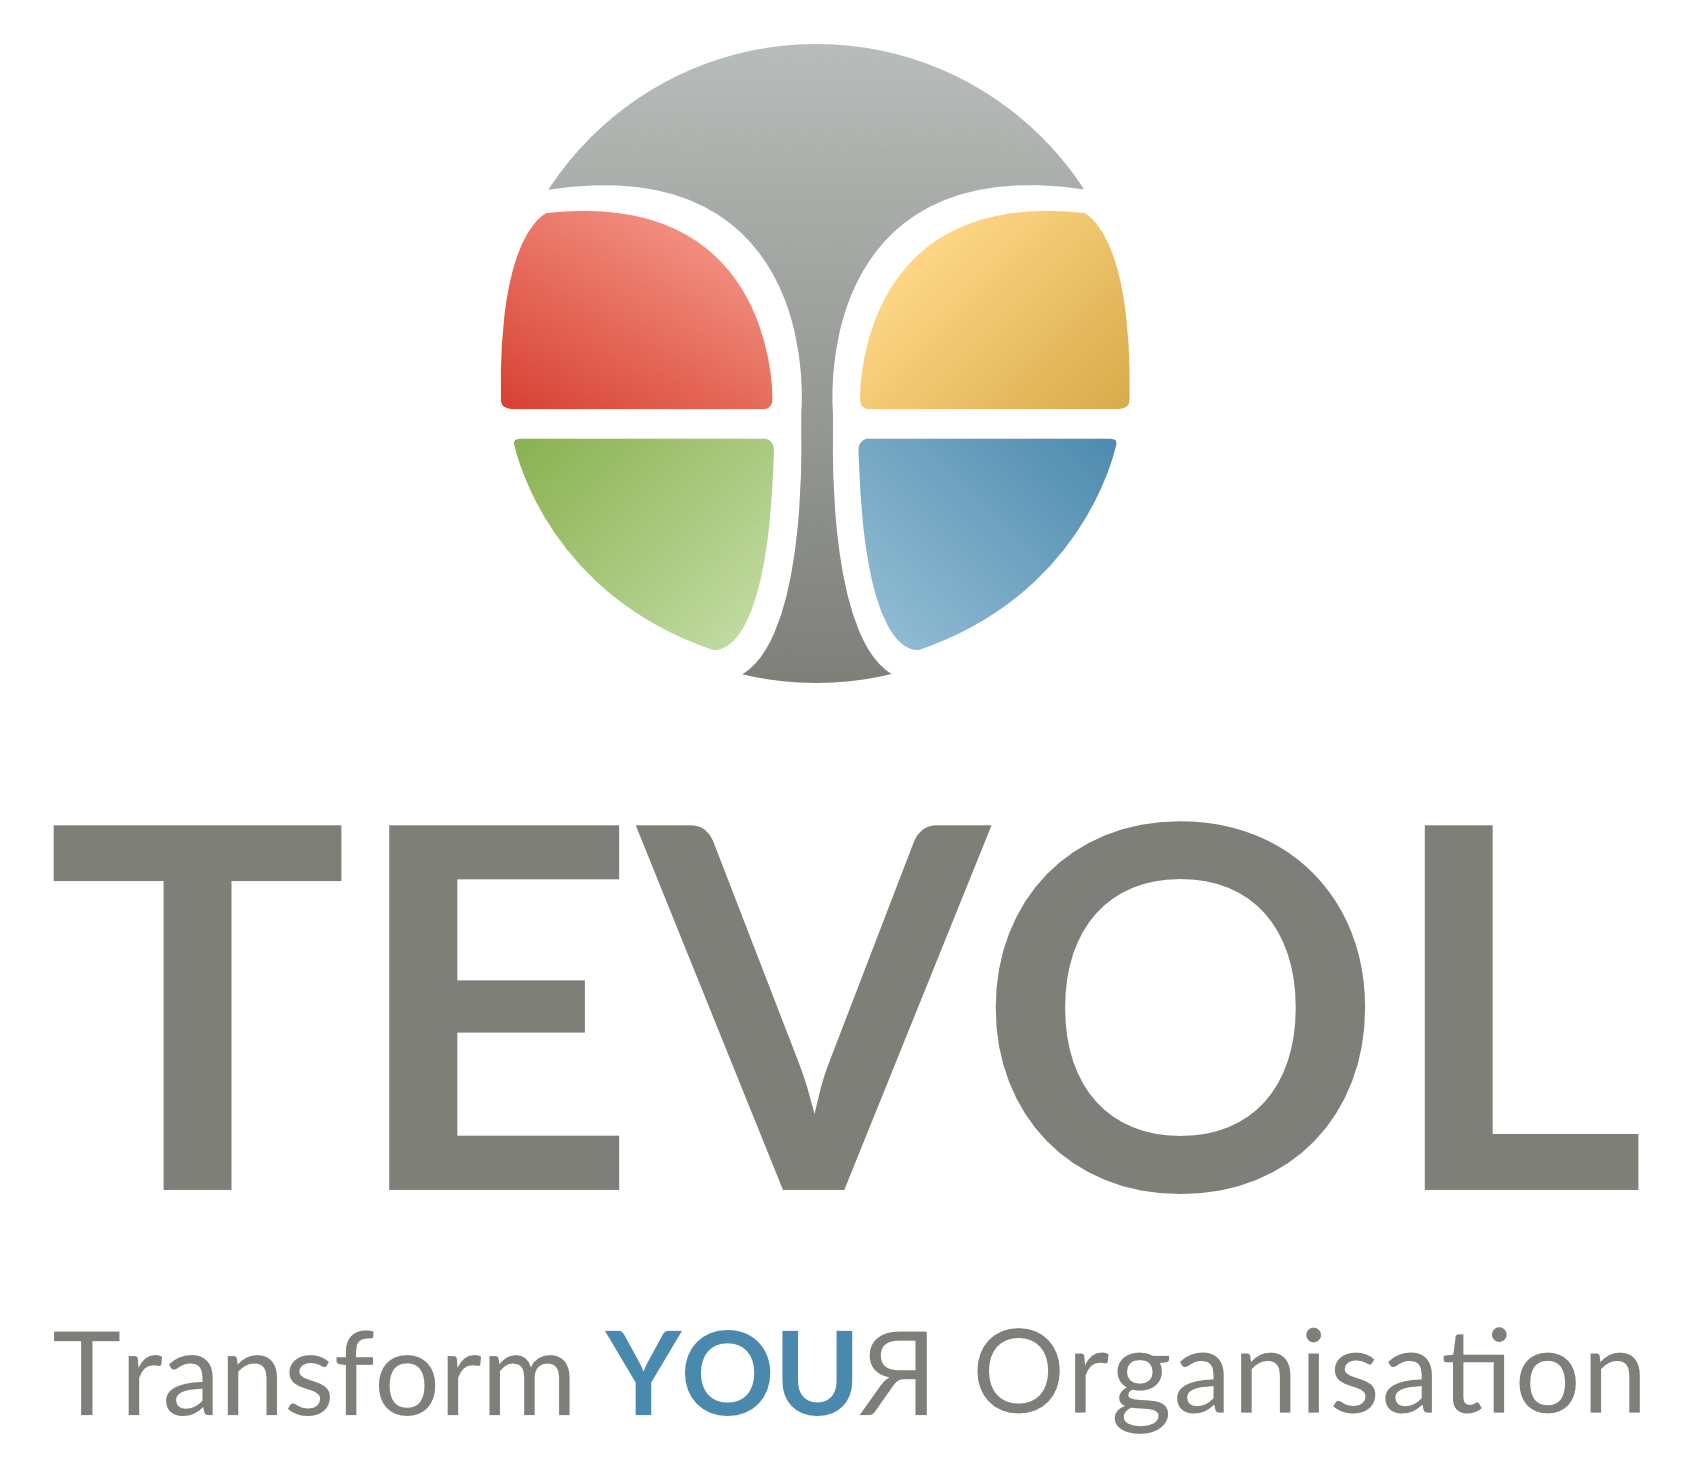 TEVOL Transform YOUR Organization